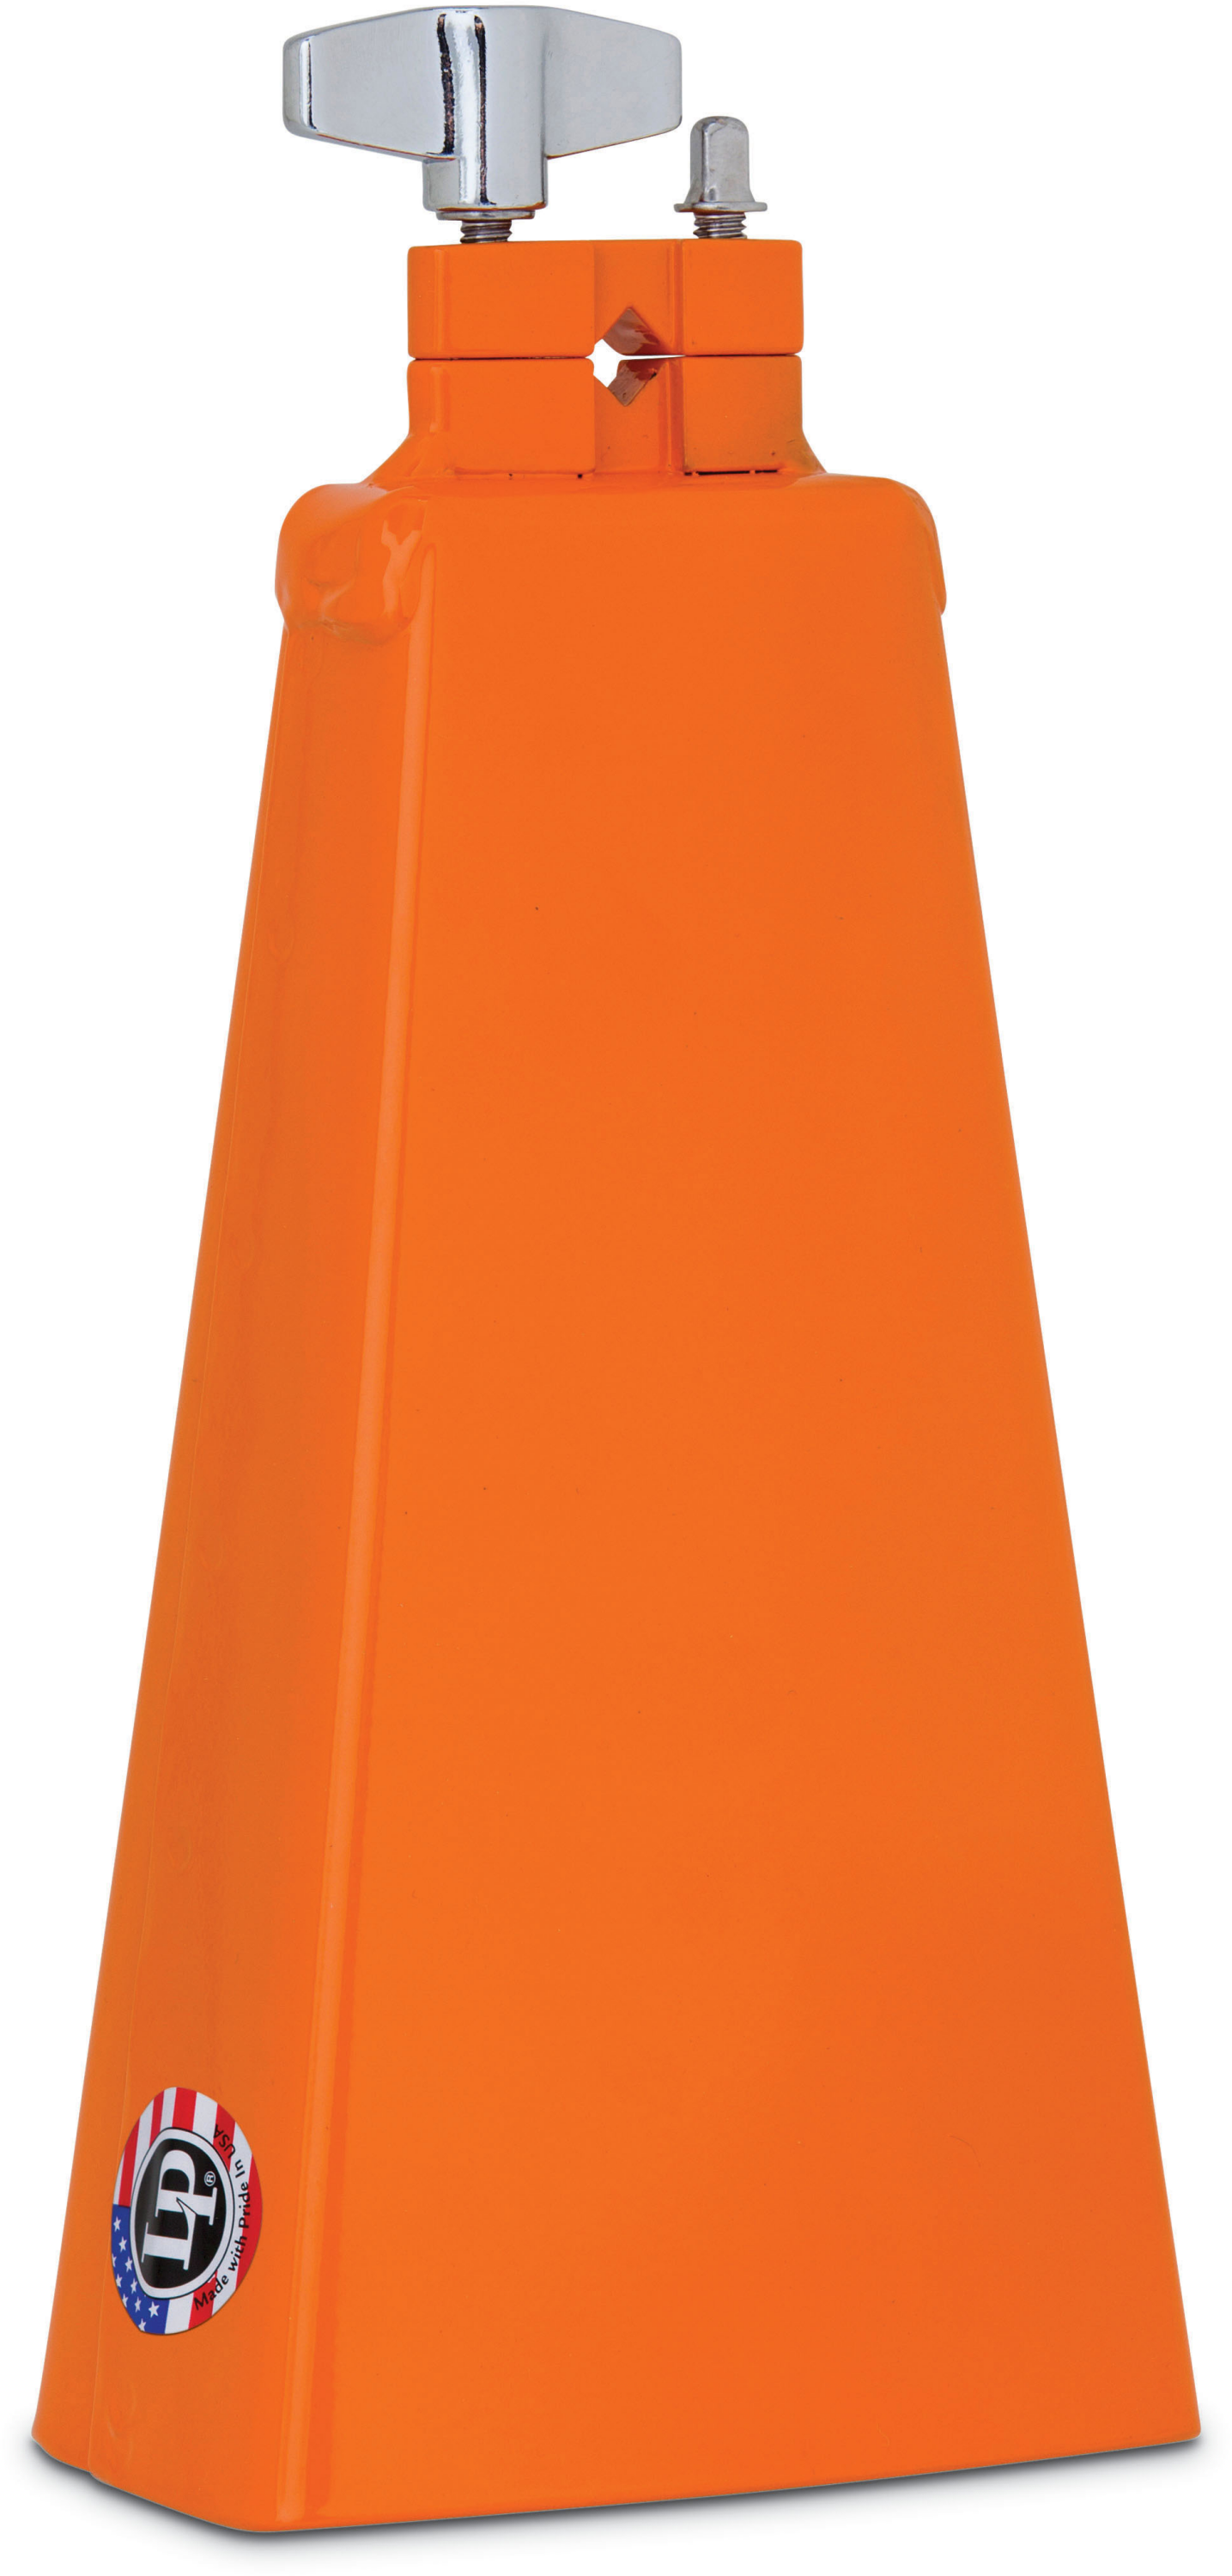 11-inch orange cowbell